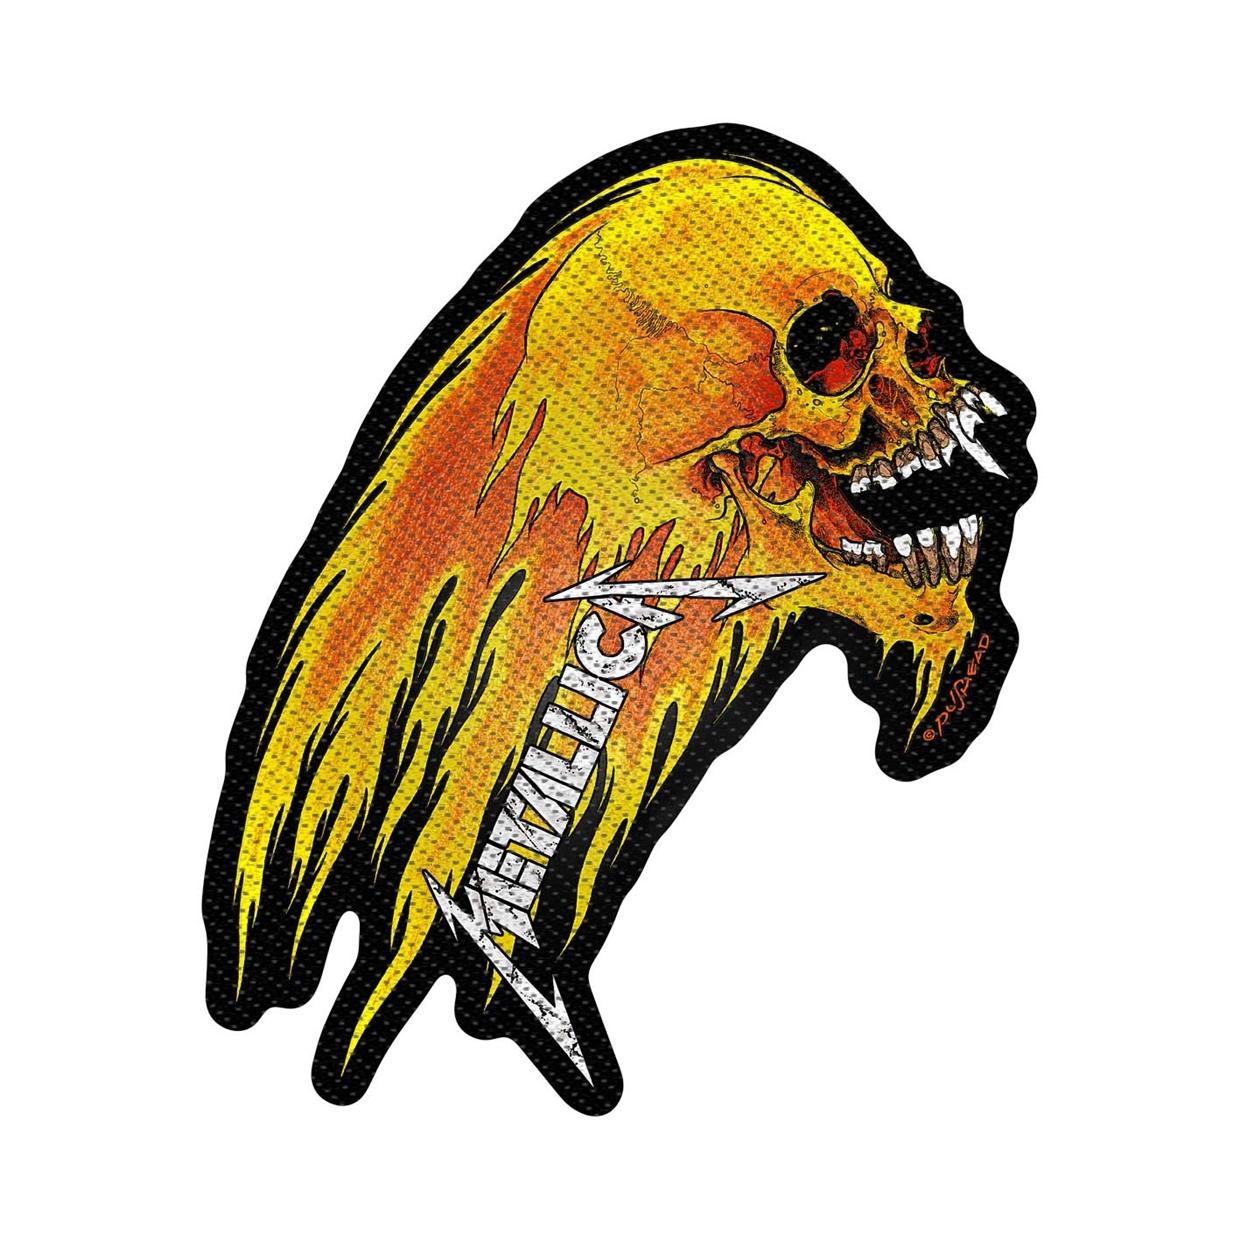 (^J) Metallica ItBVi Flaming Skull by JbgAEg pb` yCOʔ́z